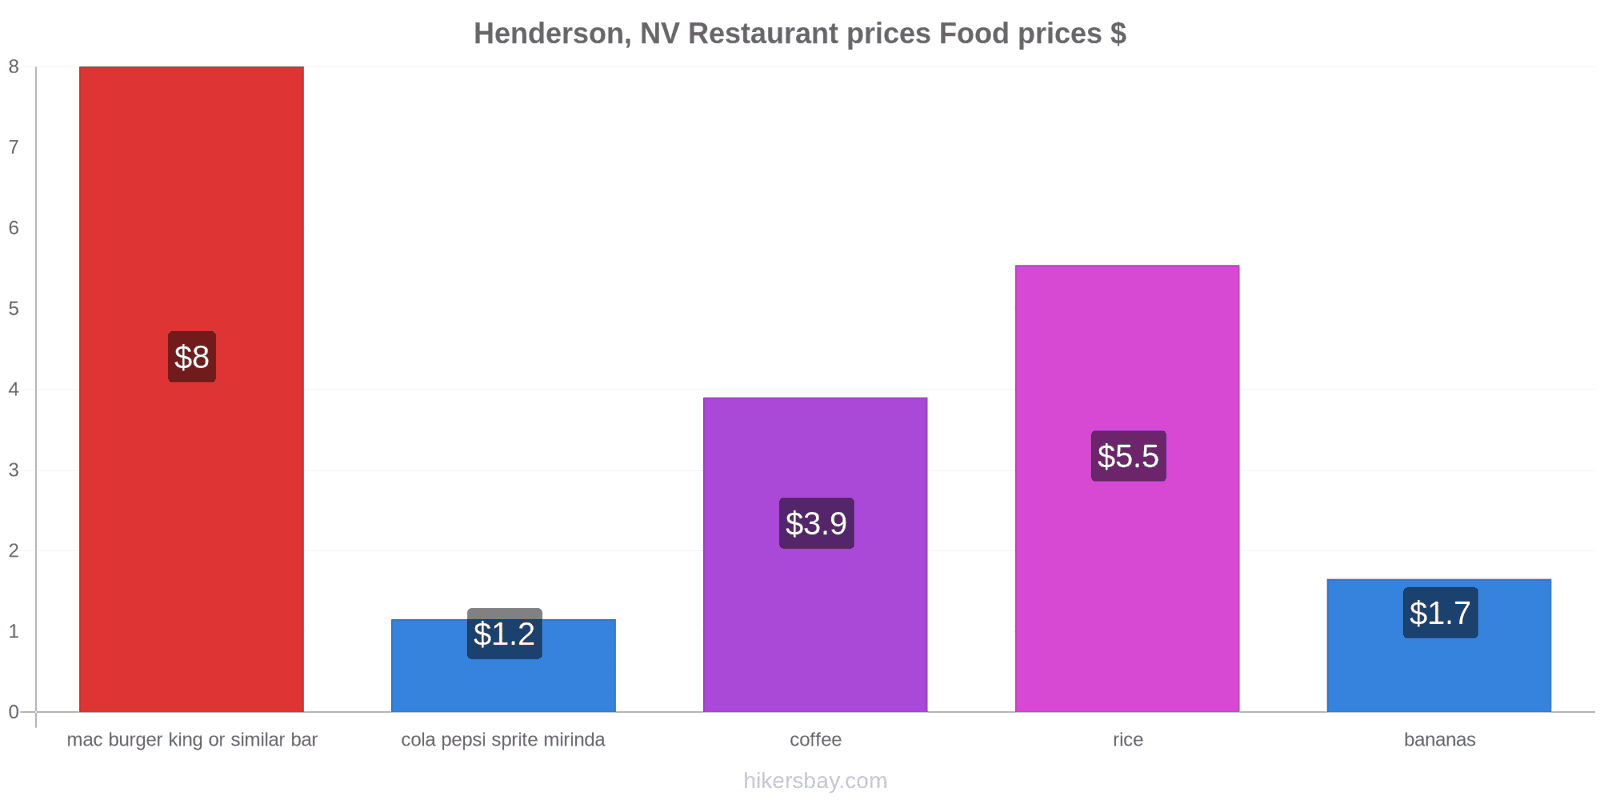 Henderson, NV price changes hikersbay.com